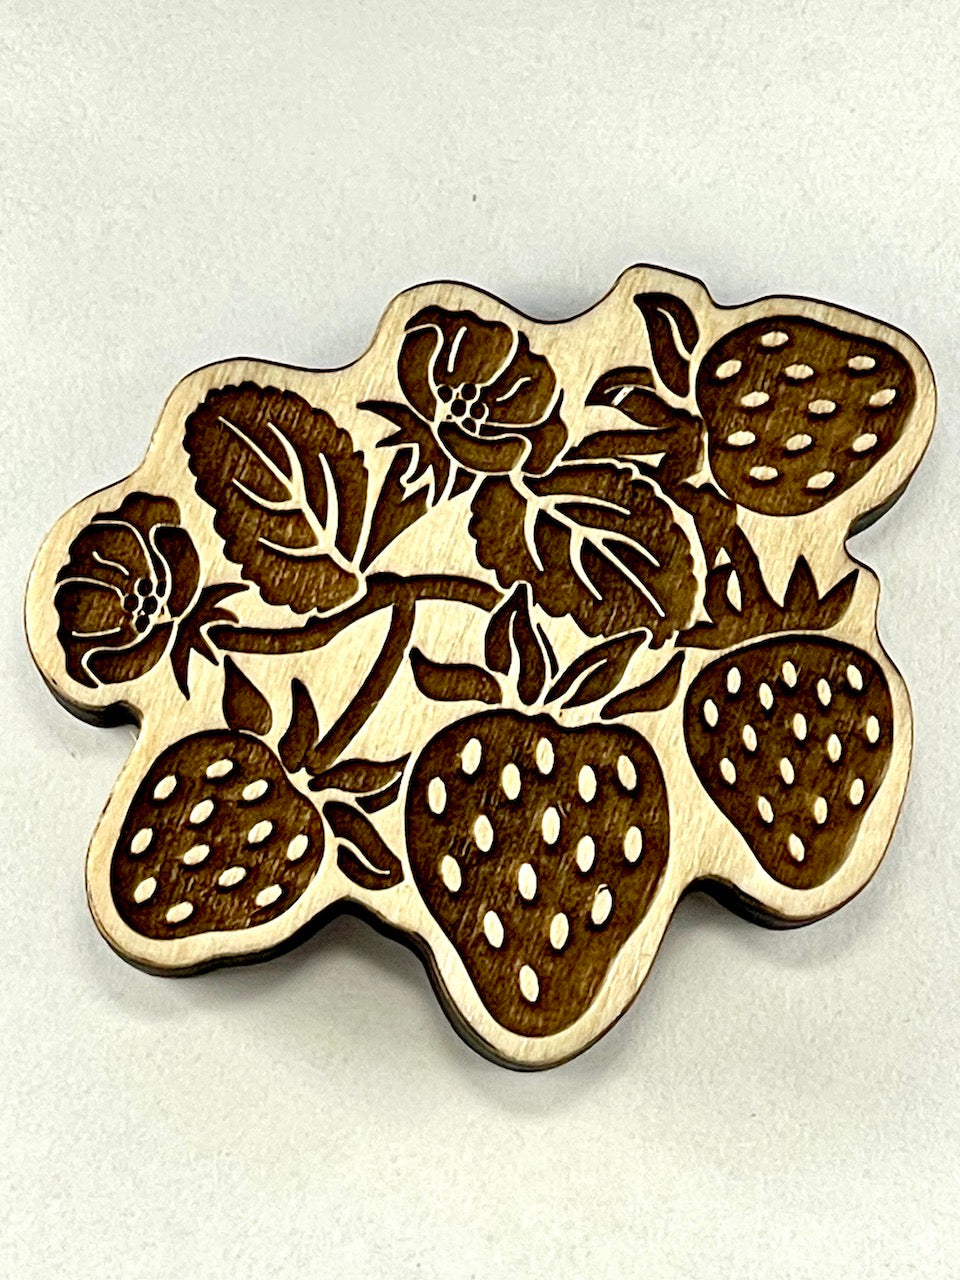 Strawberries (Strawberry Cluster)- Stamp